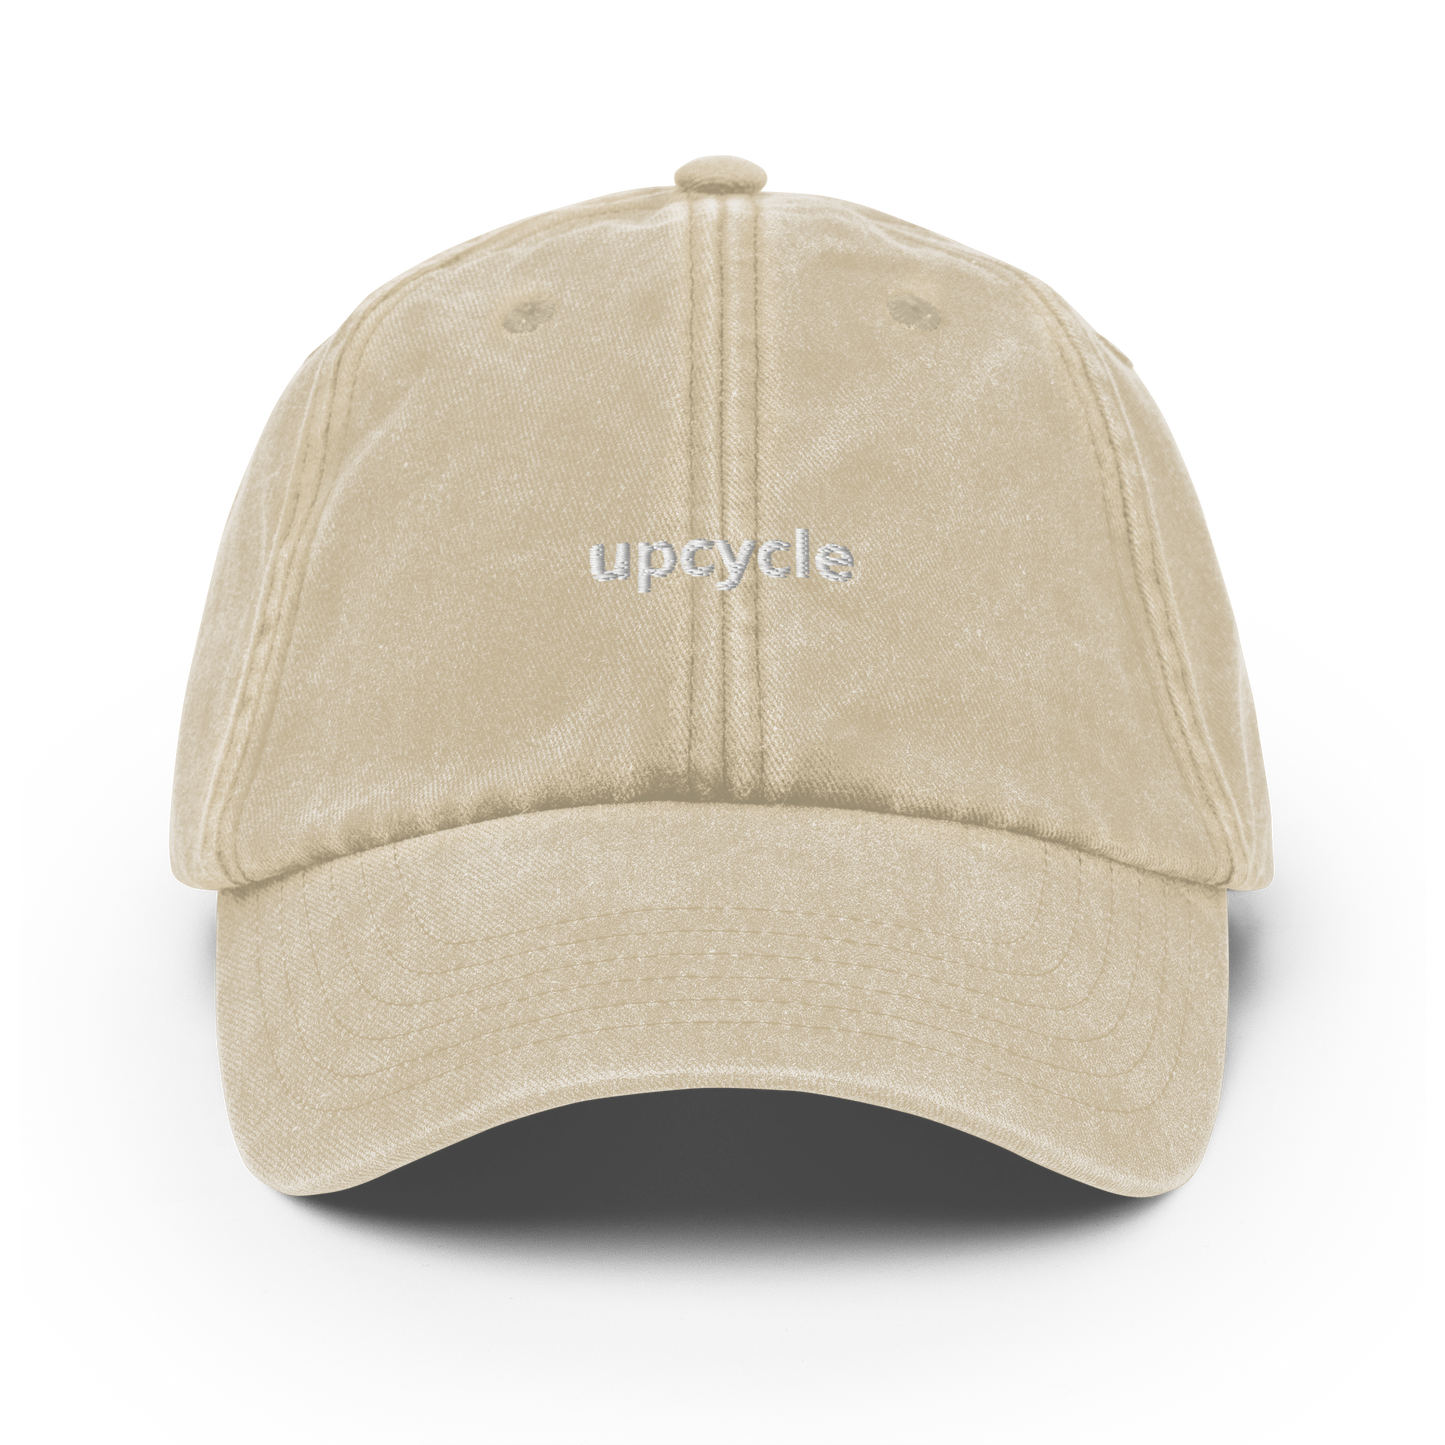 Upcycle - Vintage Hat